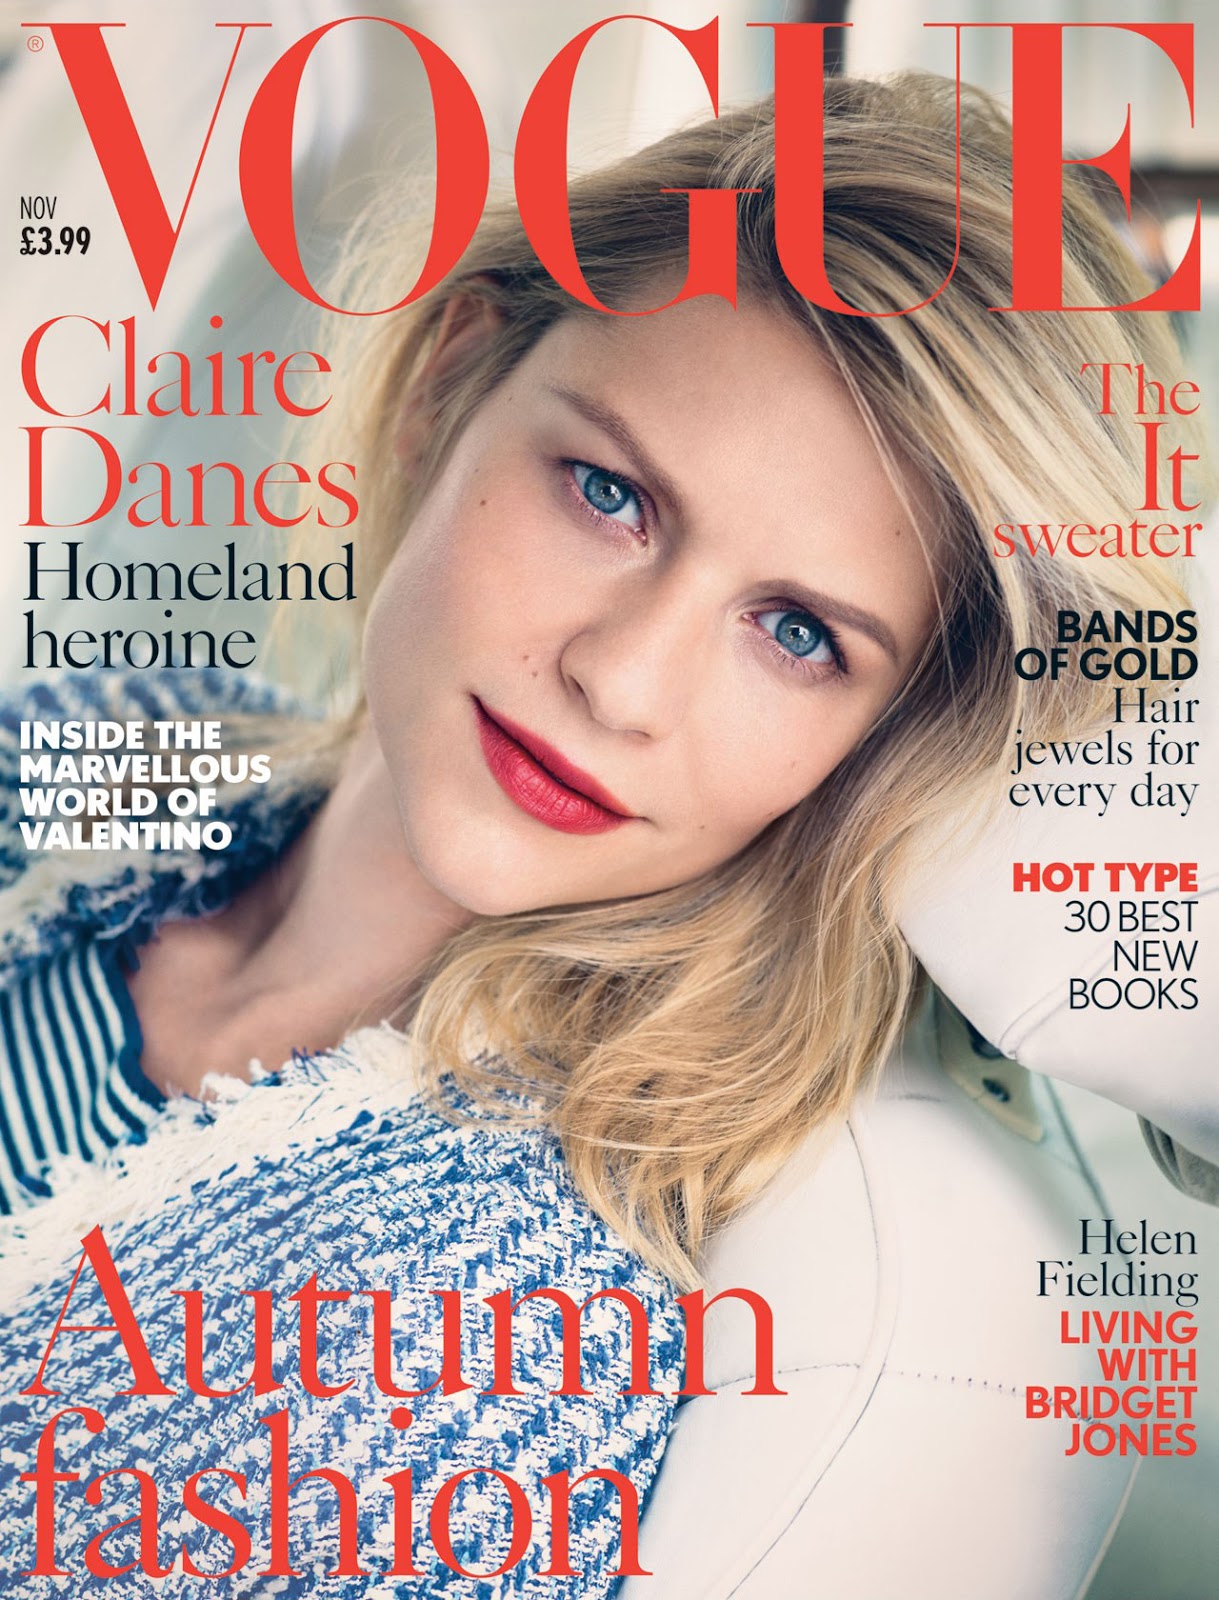 Vogue's Covers: Vogue UK